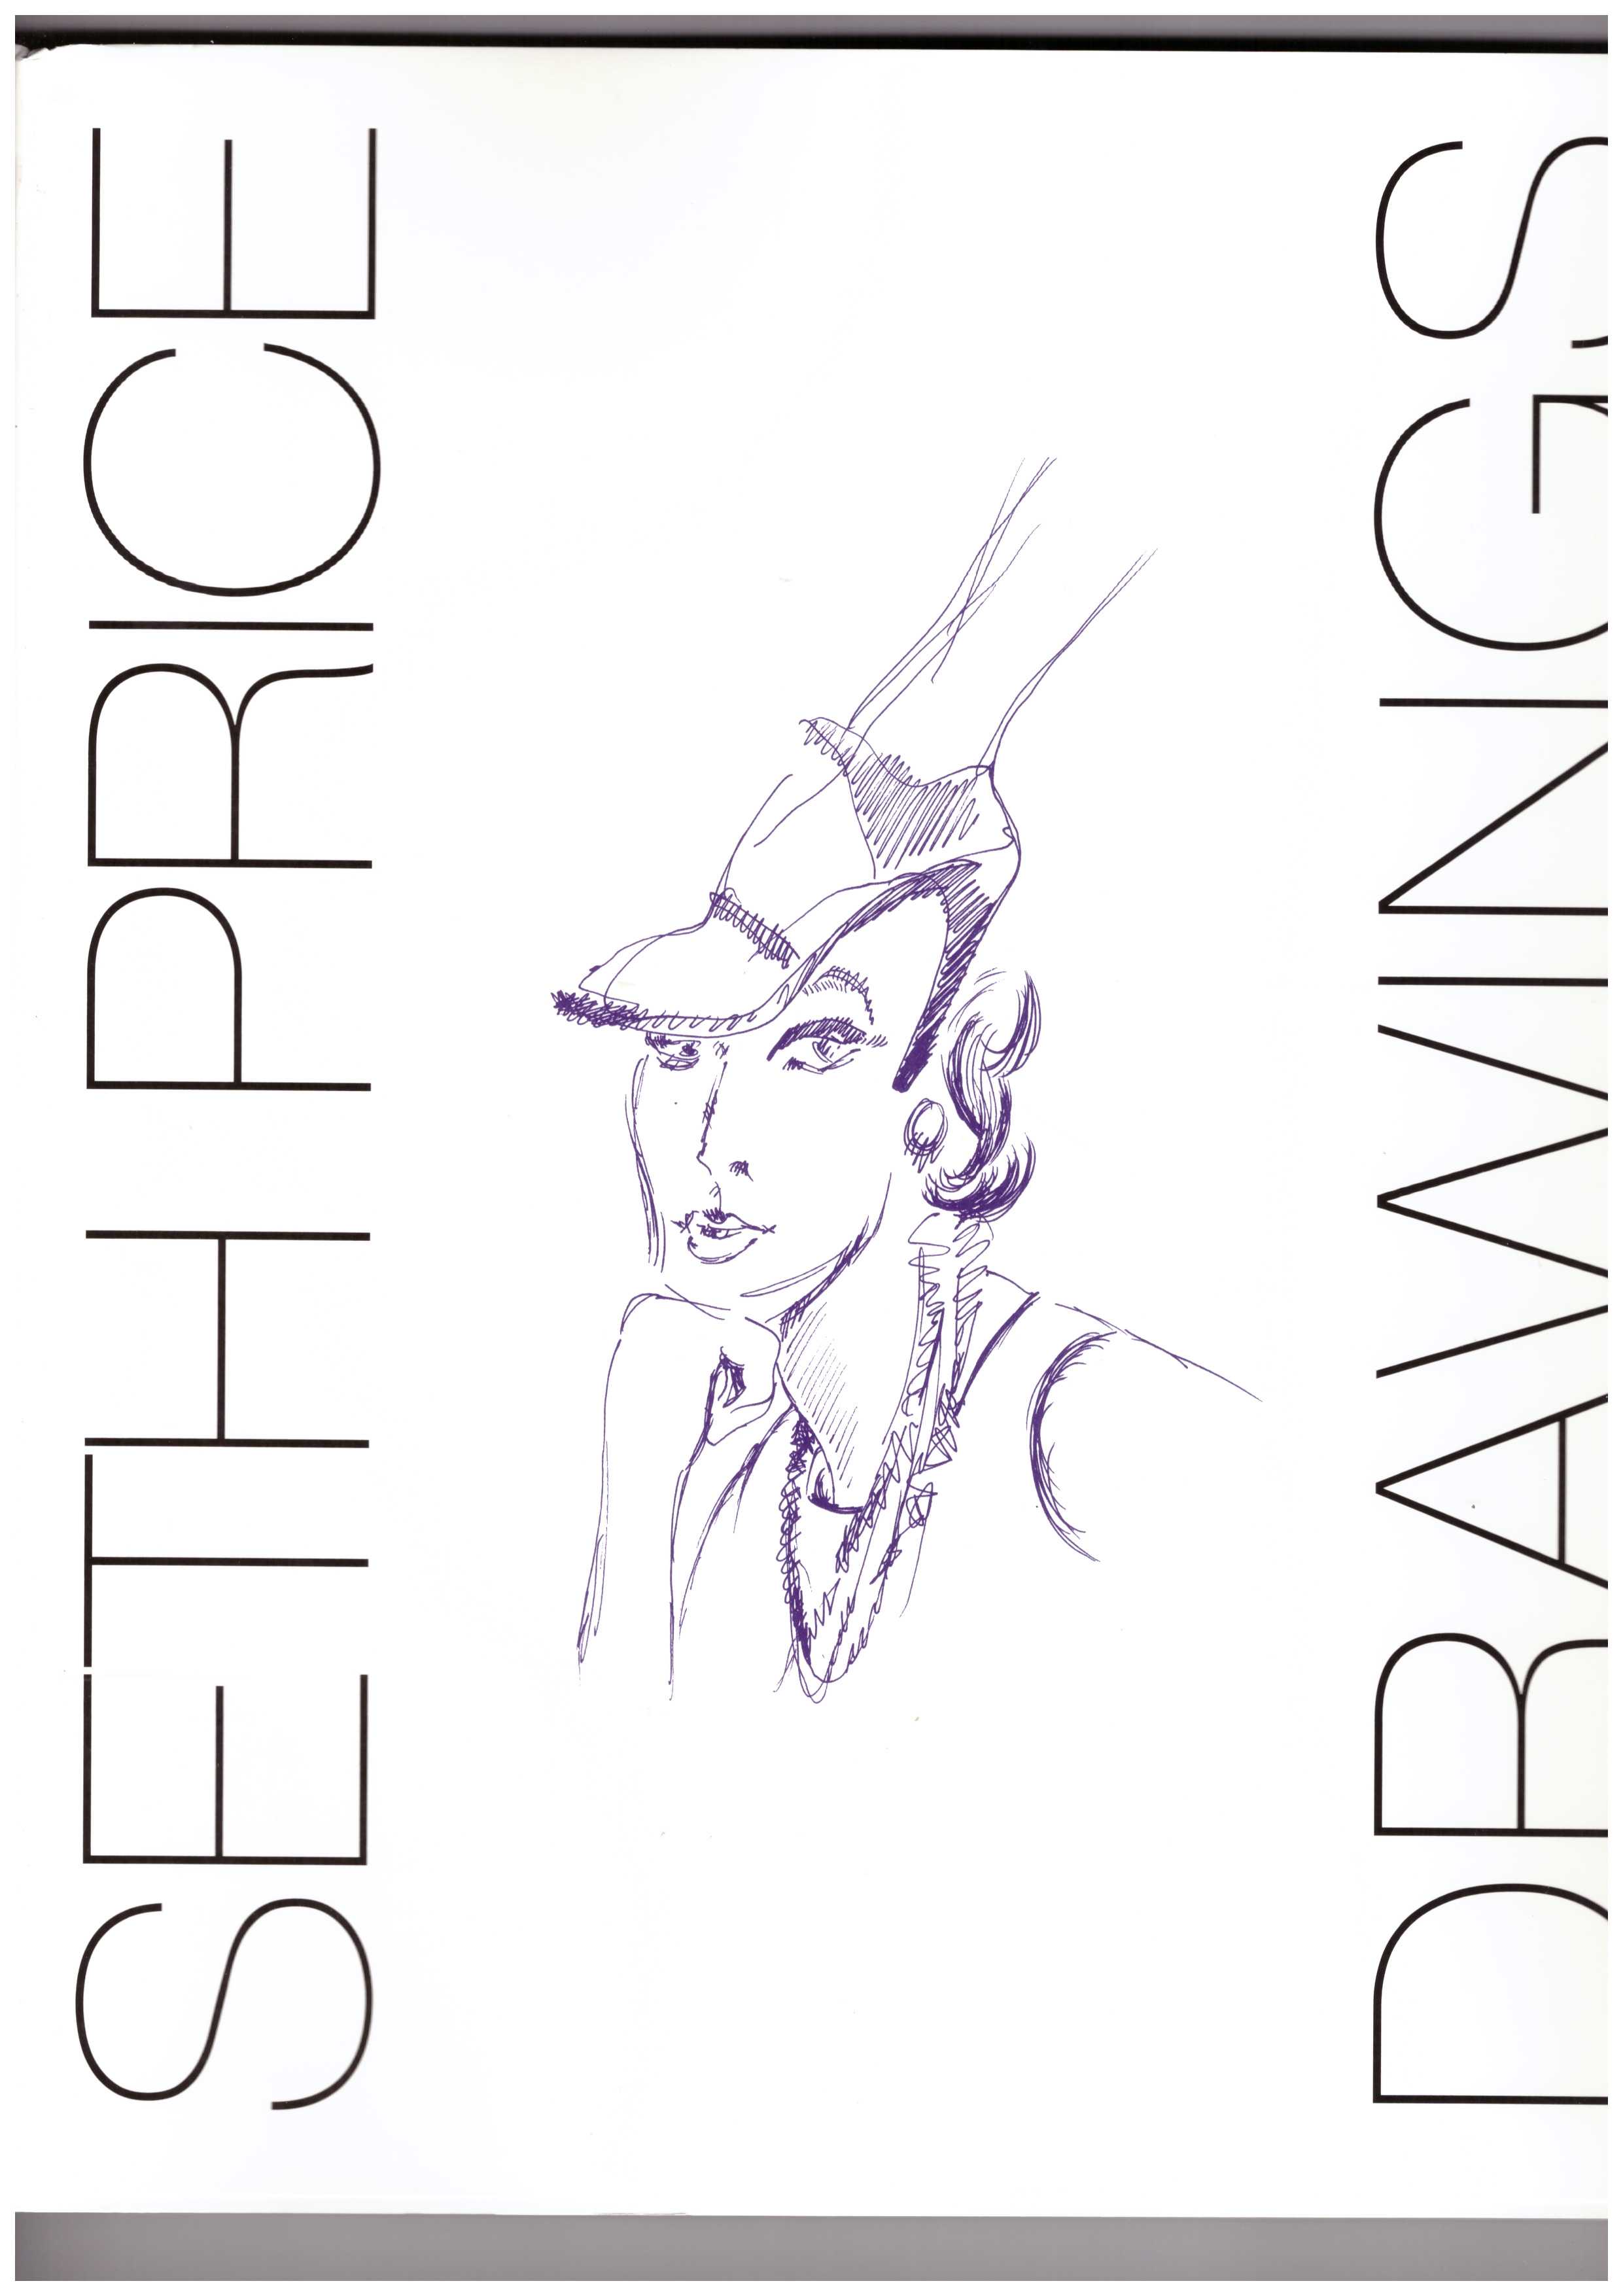 FUNKE, Bettina (ed) - Seth Price. Drawings